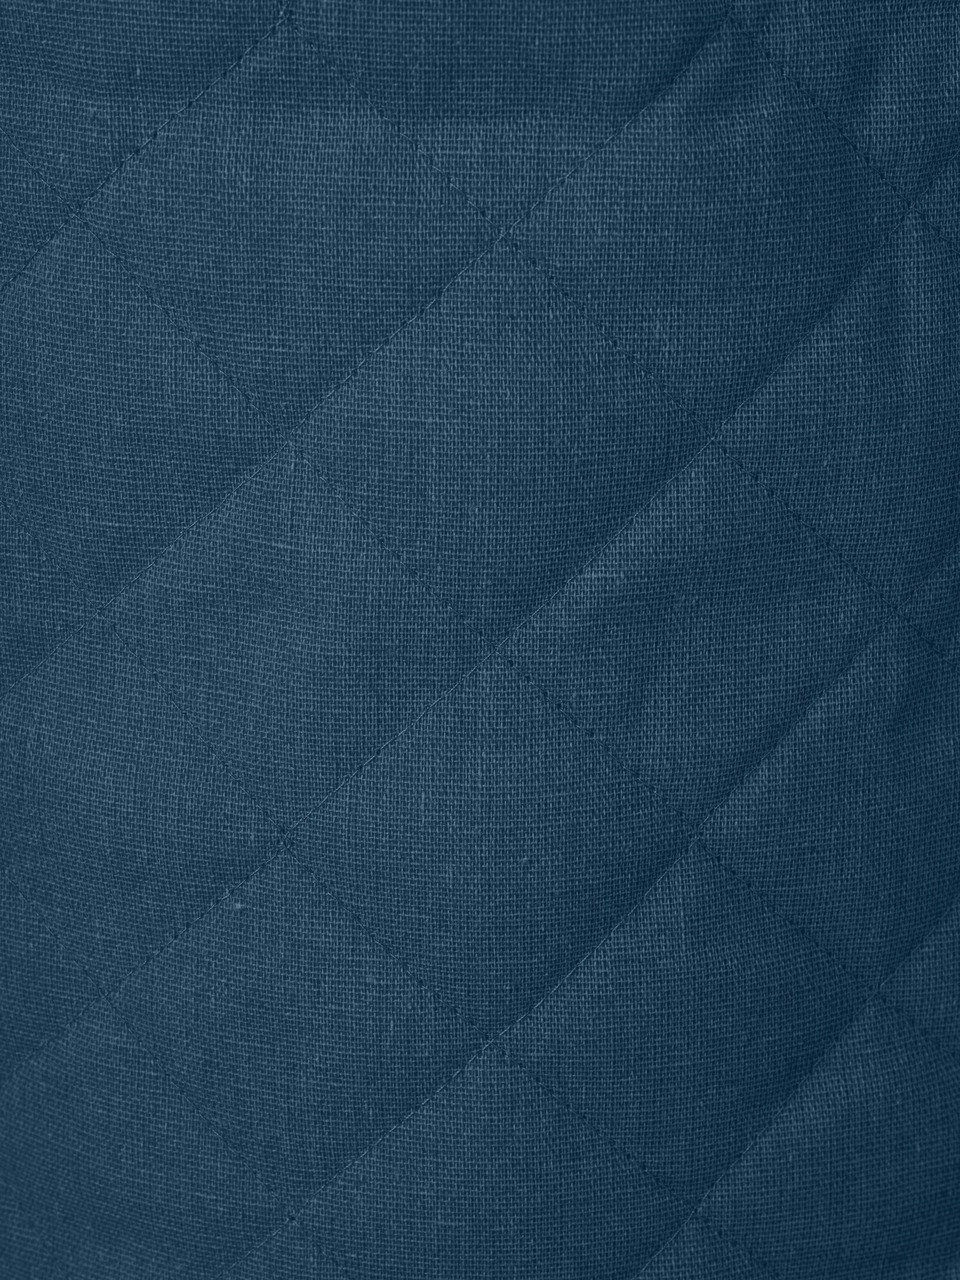 Zwei Navy Griffe, Wäschekorb Faltbar TOM Wäschesammler TAILOR Wäschesammler), Waffel-Muster, St., HOME Waffeldesign Wäschetasche (1 1x